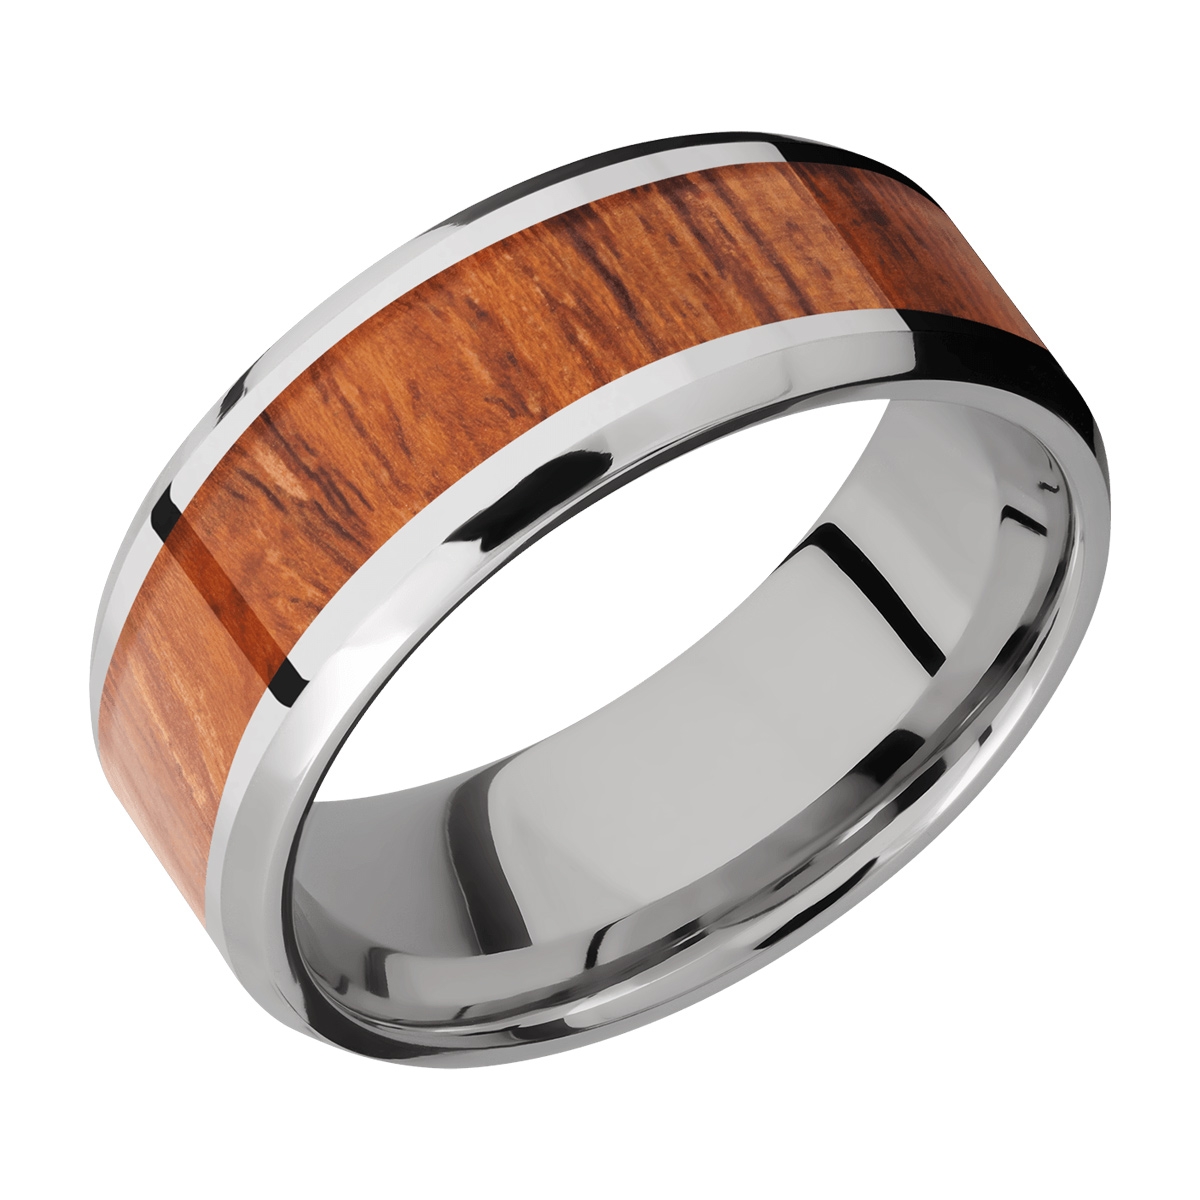 Lashbrook CC8B15(NS)/HARDWOOD Cobalt Chrome Wedding Ring or Band